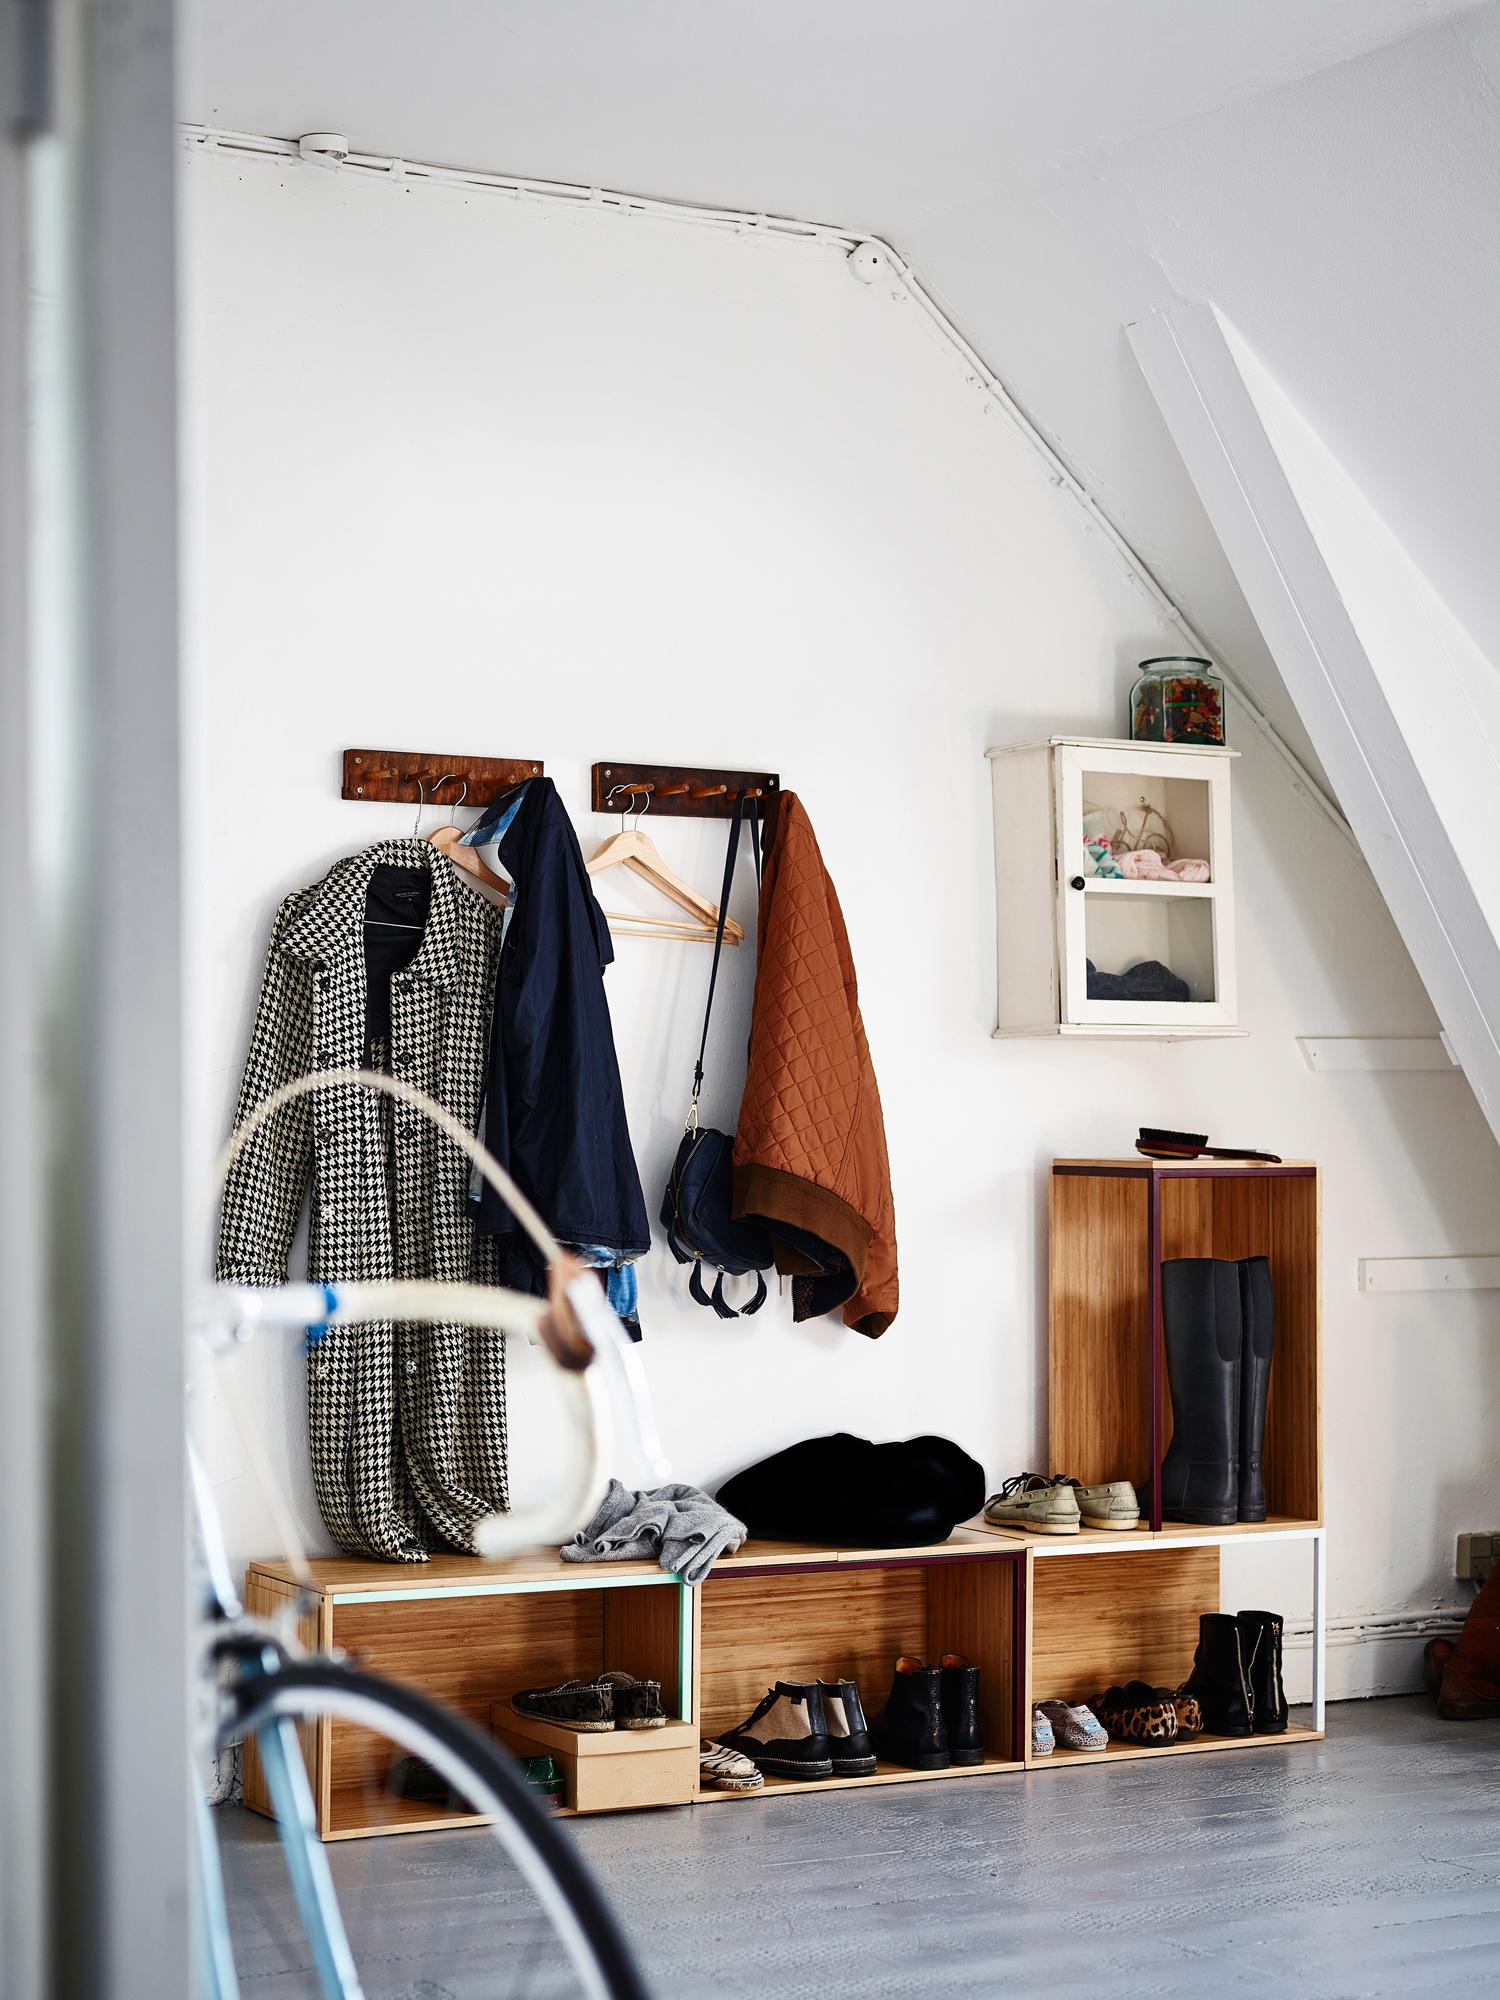 Kistensystem als Garderobe #aufbewahrung #ikea #garderobe #flurgestaltung ©Inter IKEA Systems B.V.